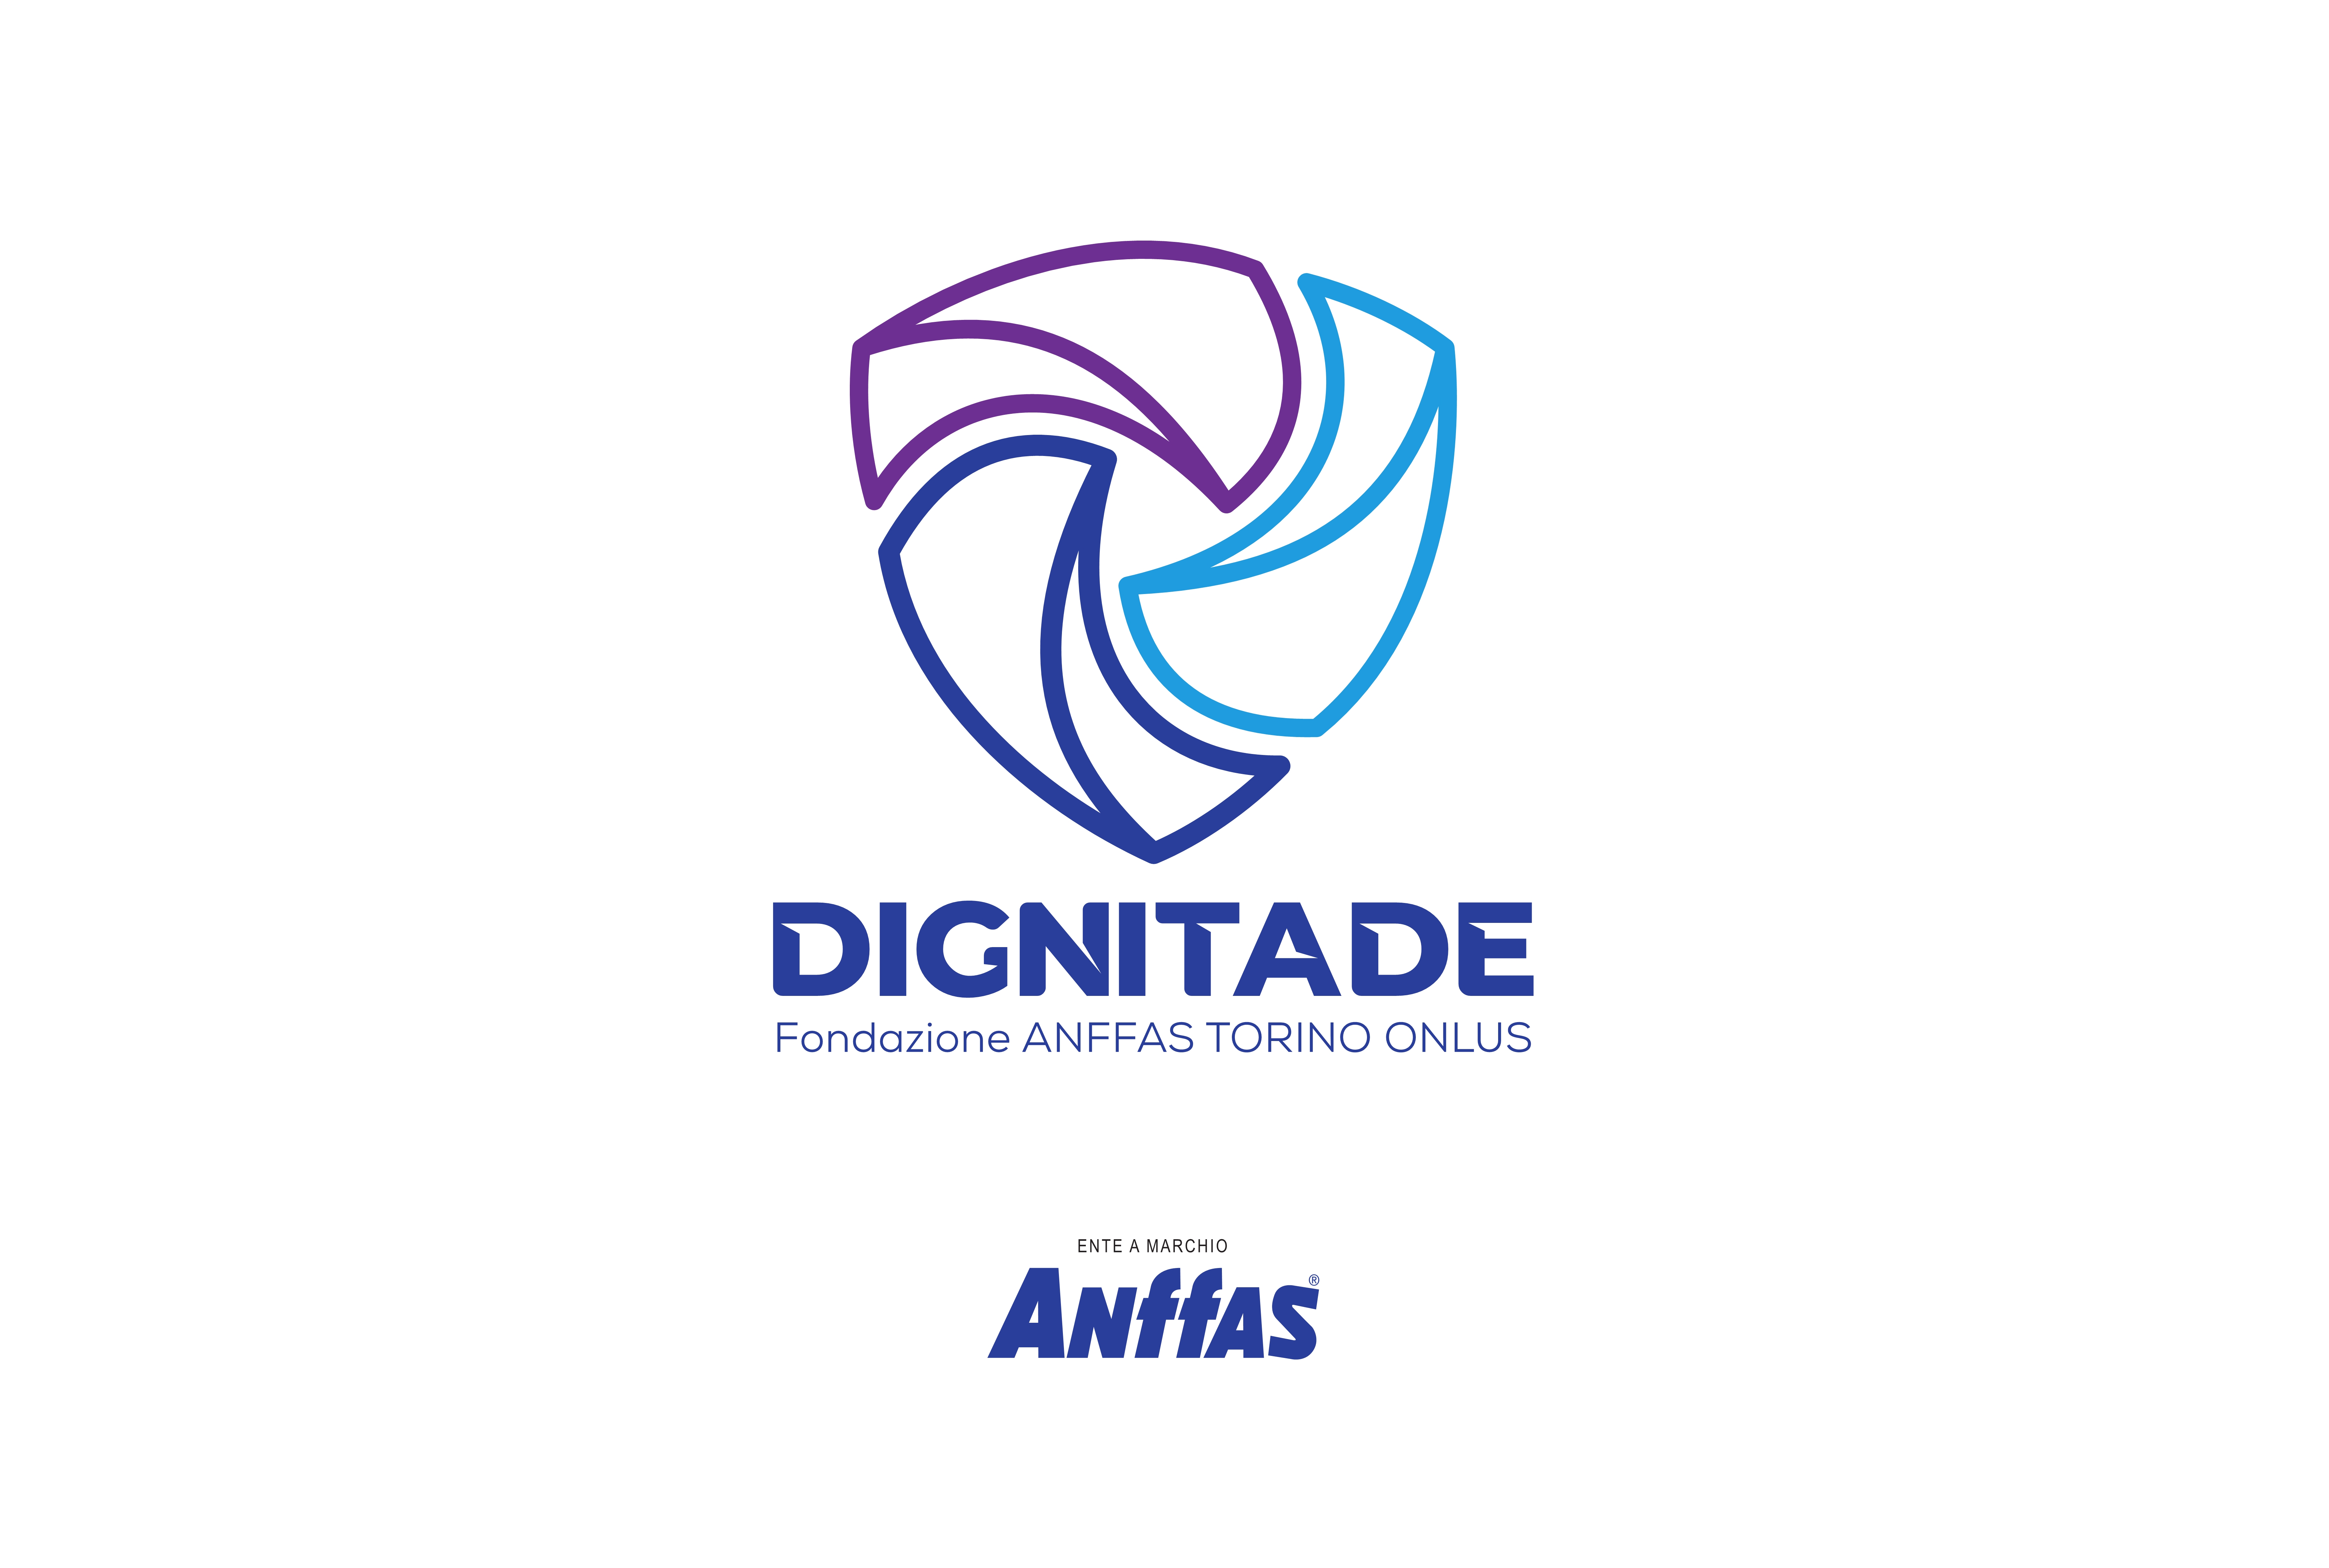 FONDAZIONE ANFFAS DIGNITADE logo